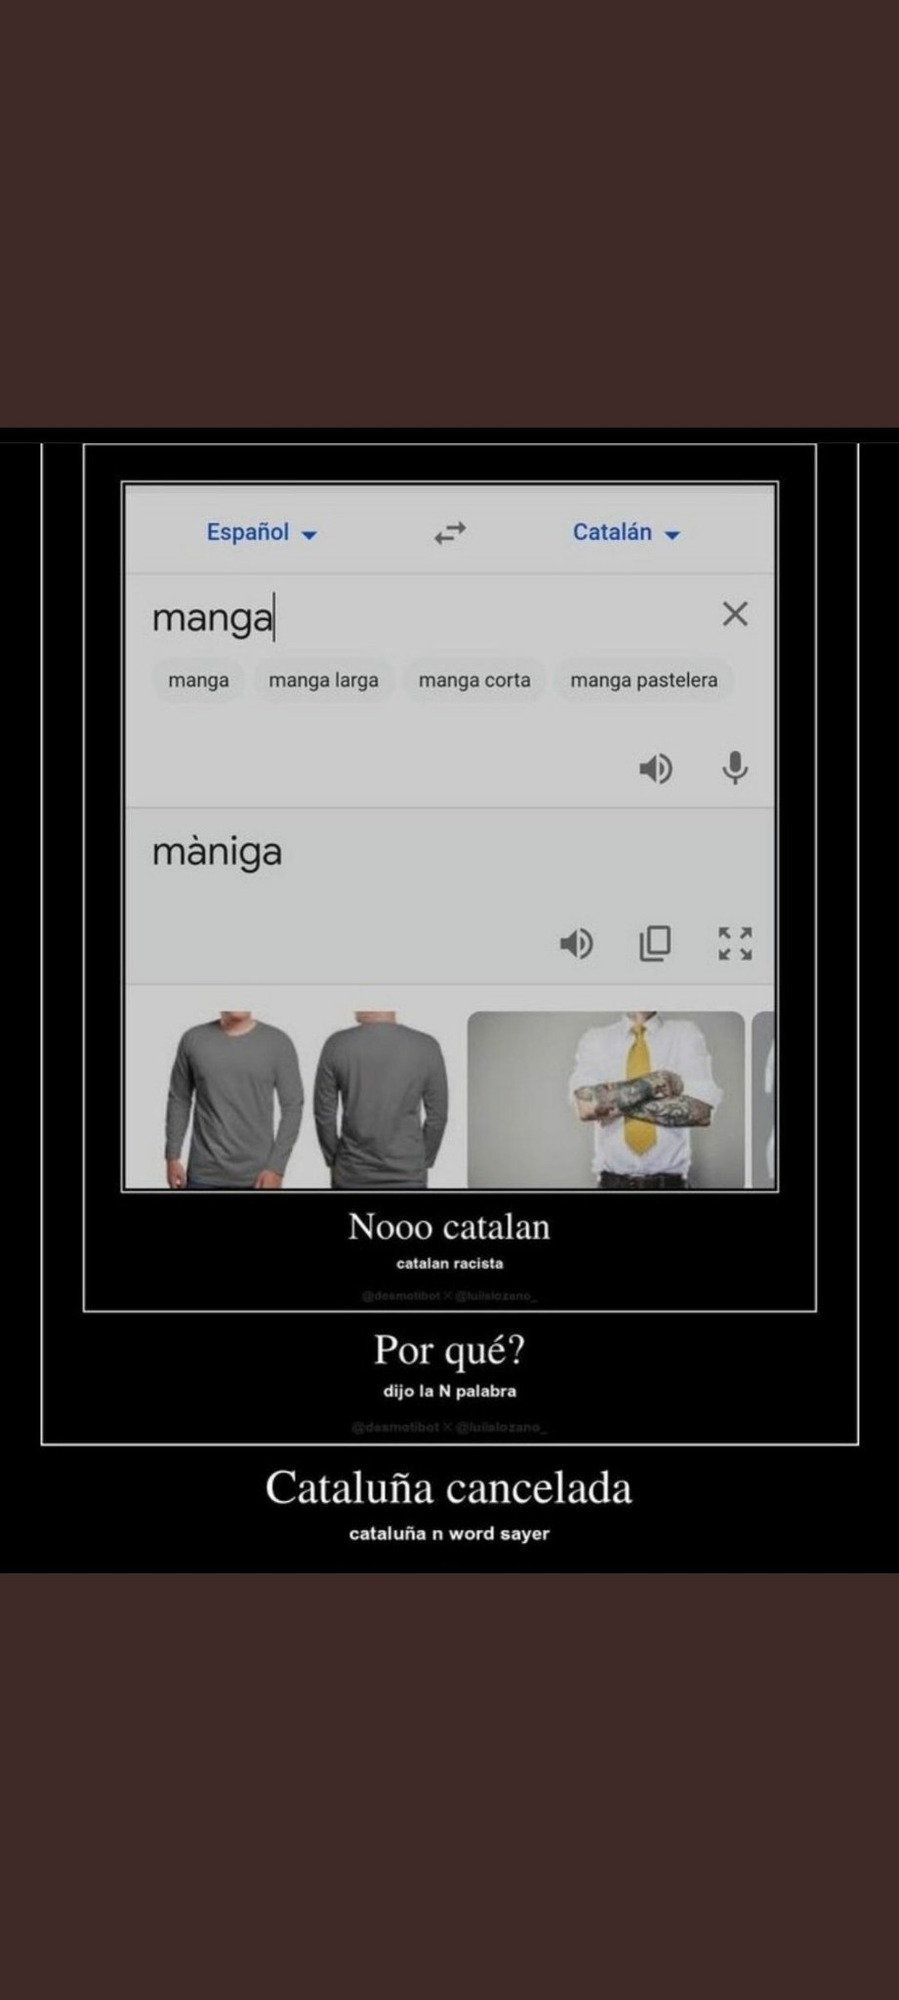 Catalan - meme